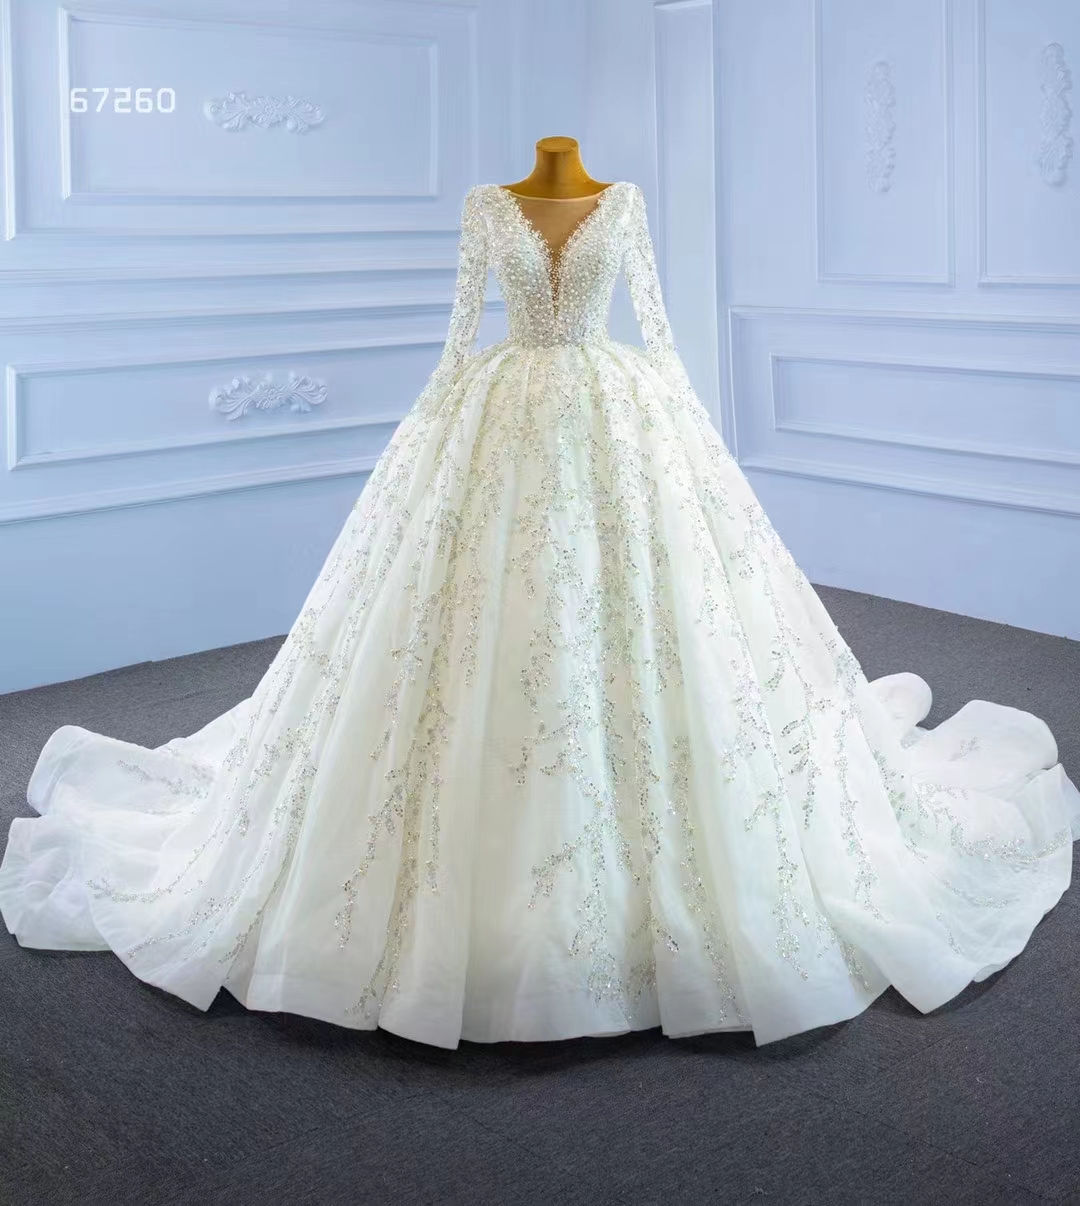 Sweetheart Wedding Dress White Lace Elegant Long Sleeve Bridal Gowns SM67260